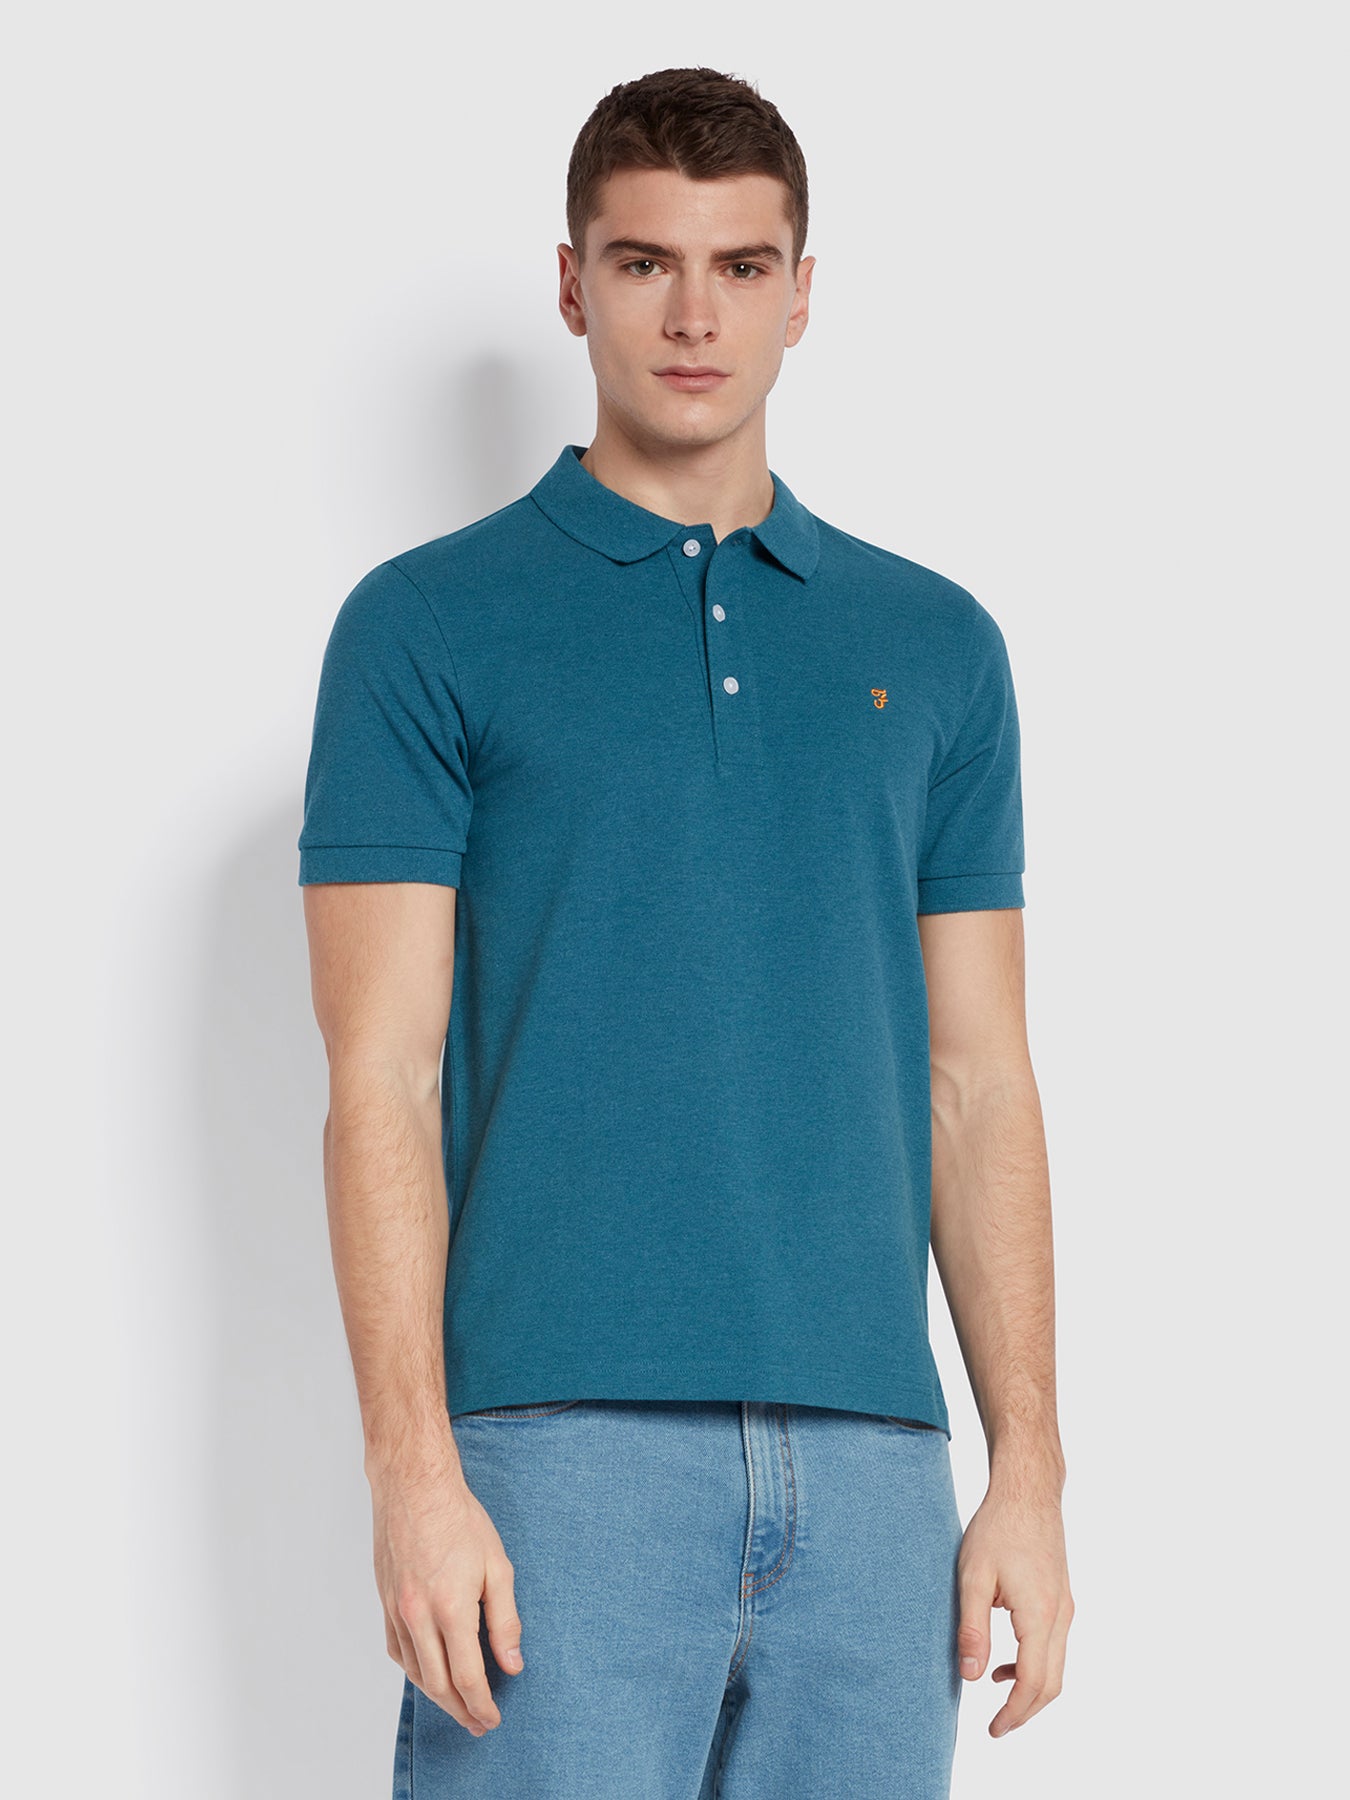 View Farah Blanes Slim Fit Short Sleeve Polo Shirt Blue Mens information